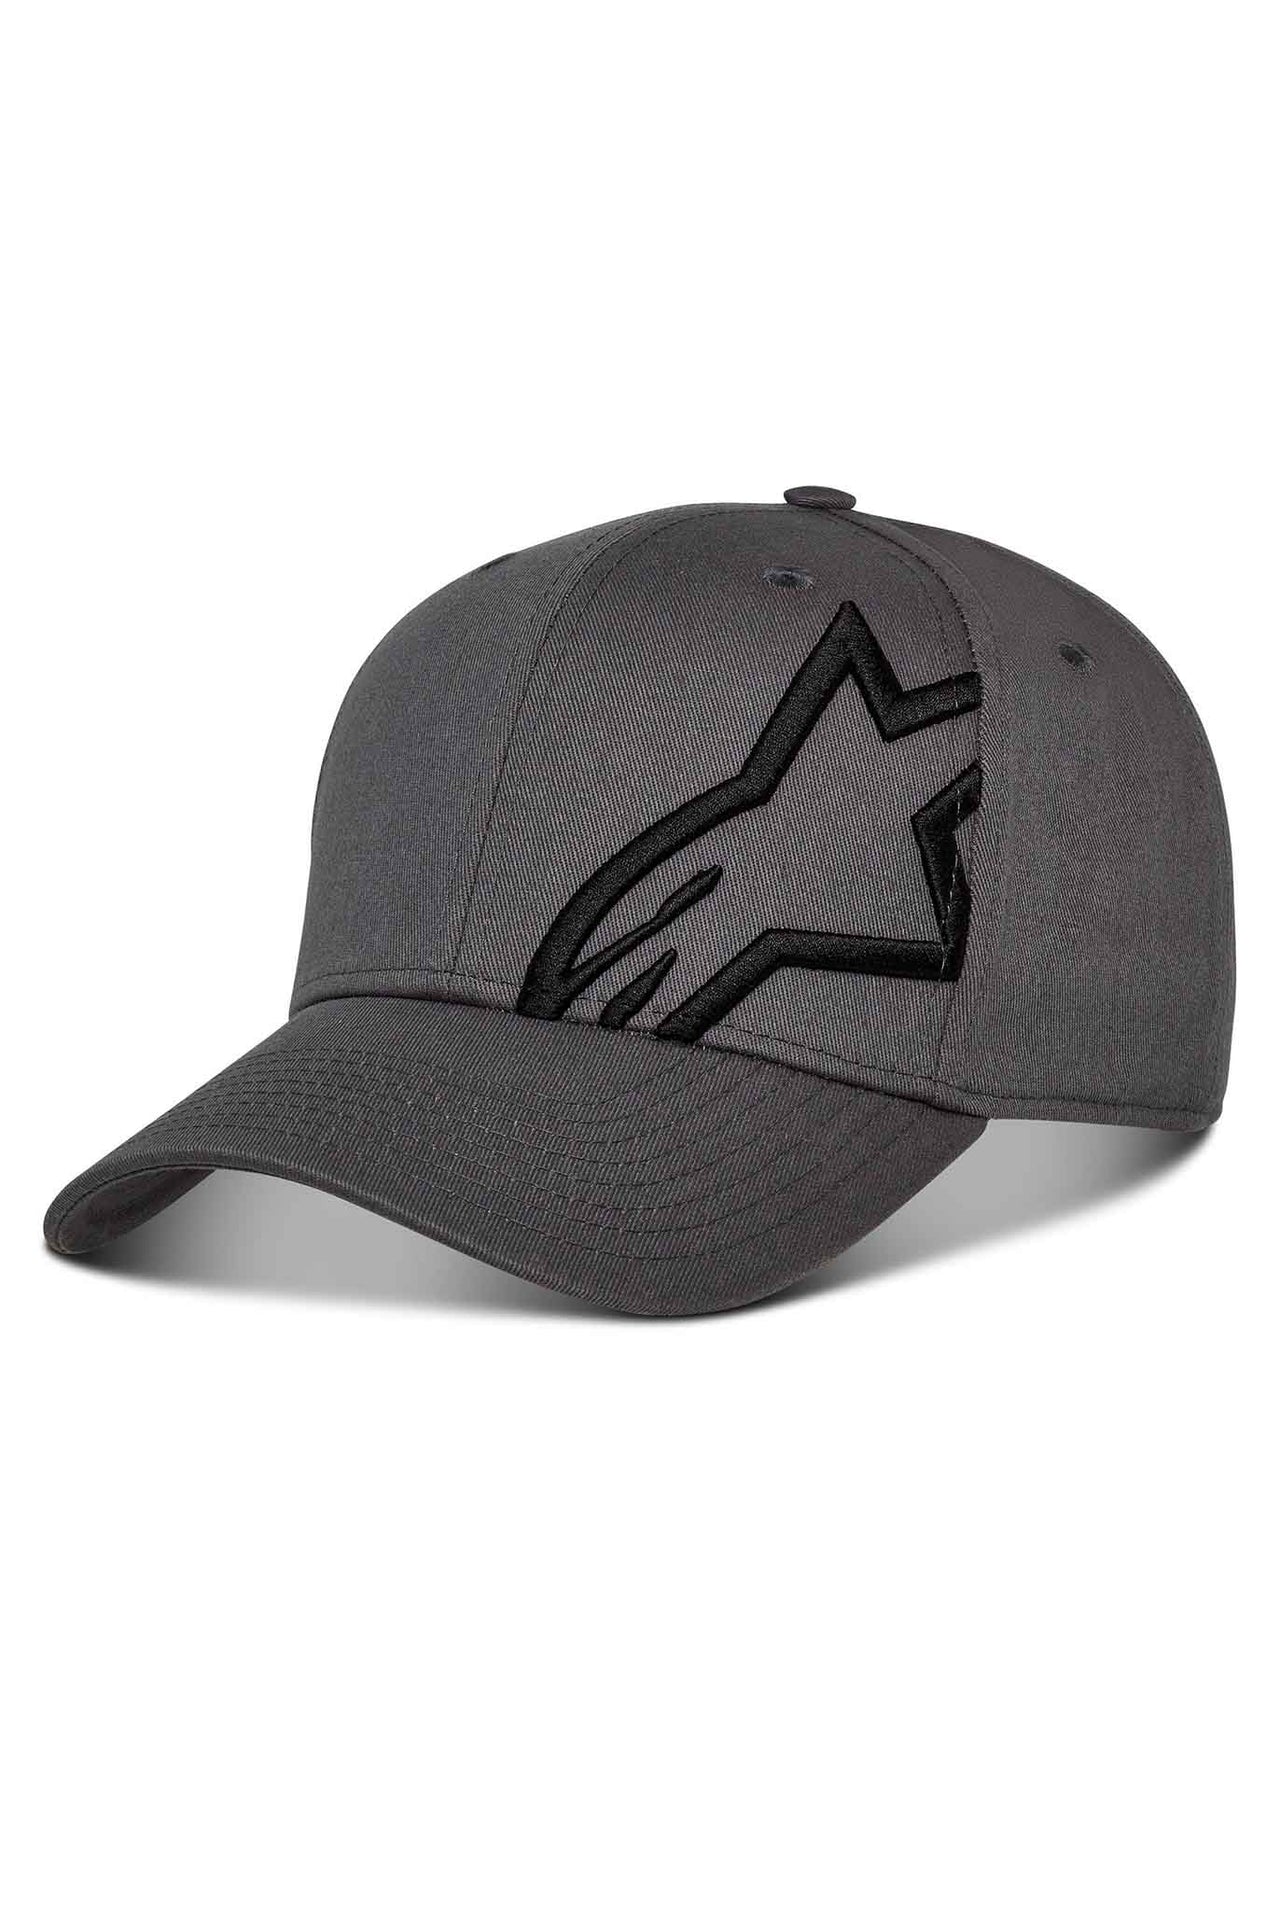 Gorra Alpinestar Corp Snap 2 Hat Ajustable